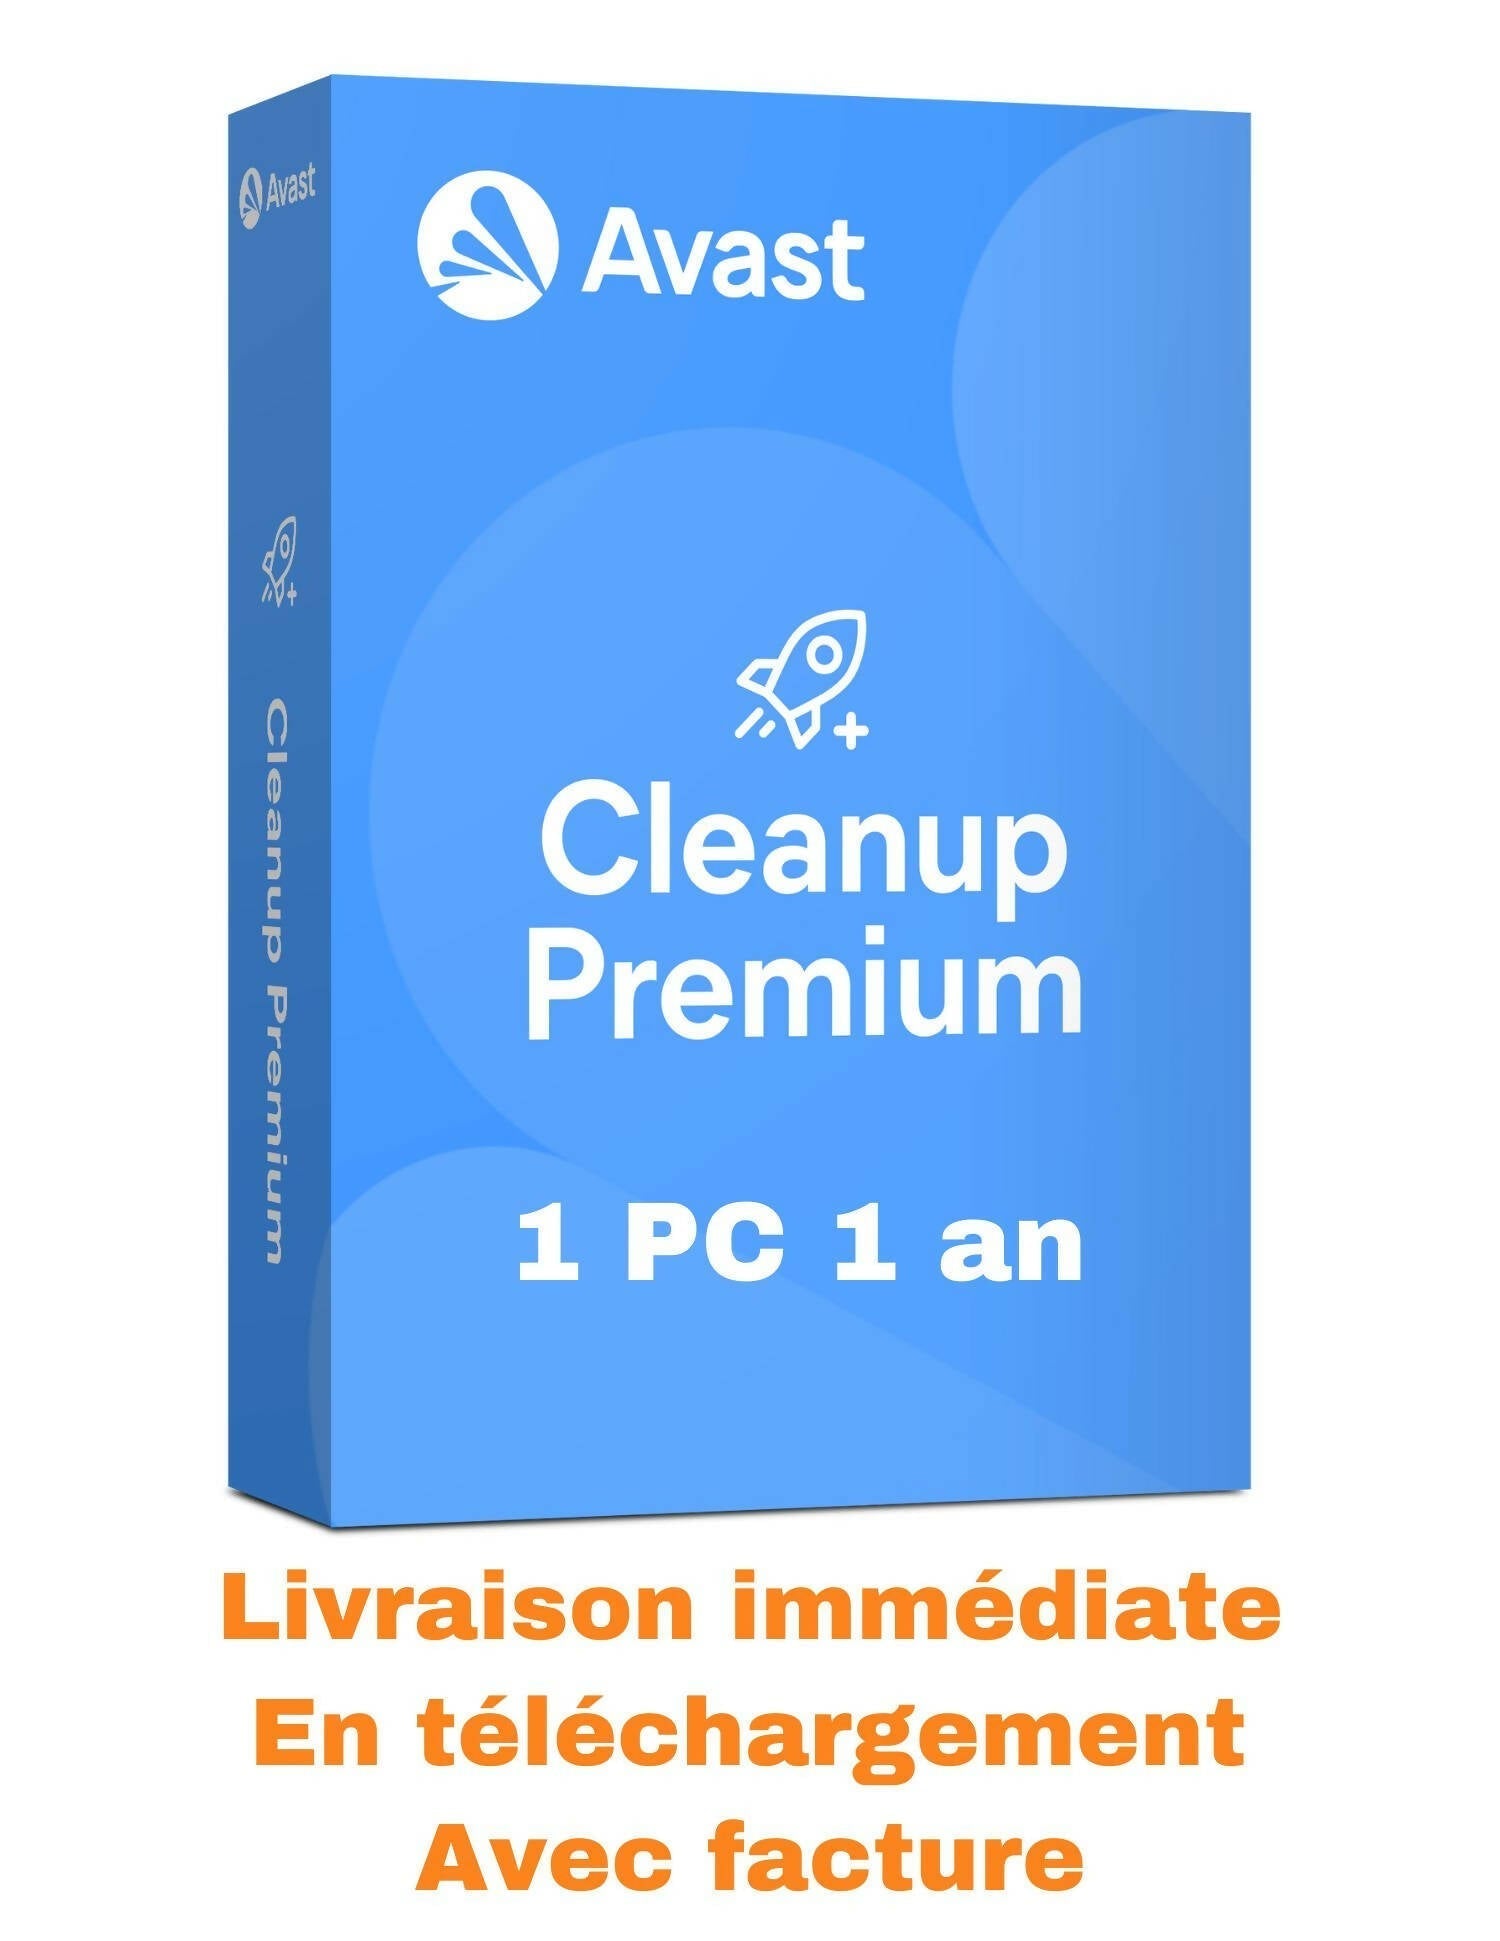 Avast Cleanup Premium 1 PC 1 an clicktofournisseur.com